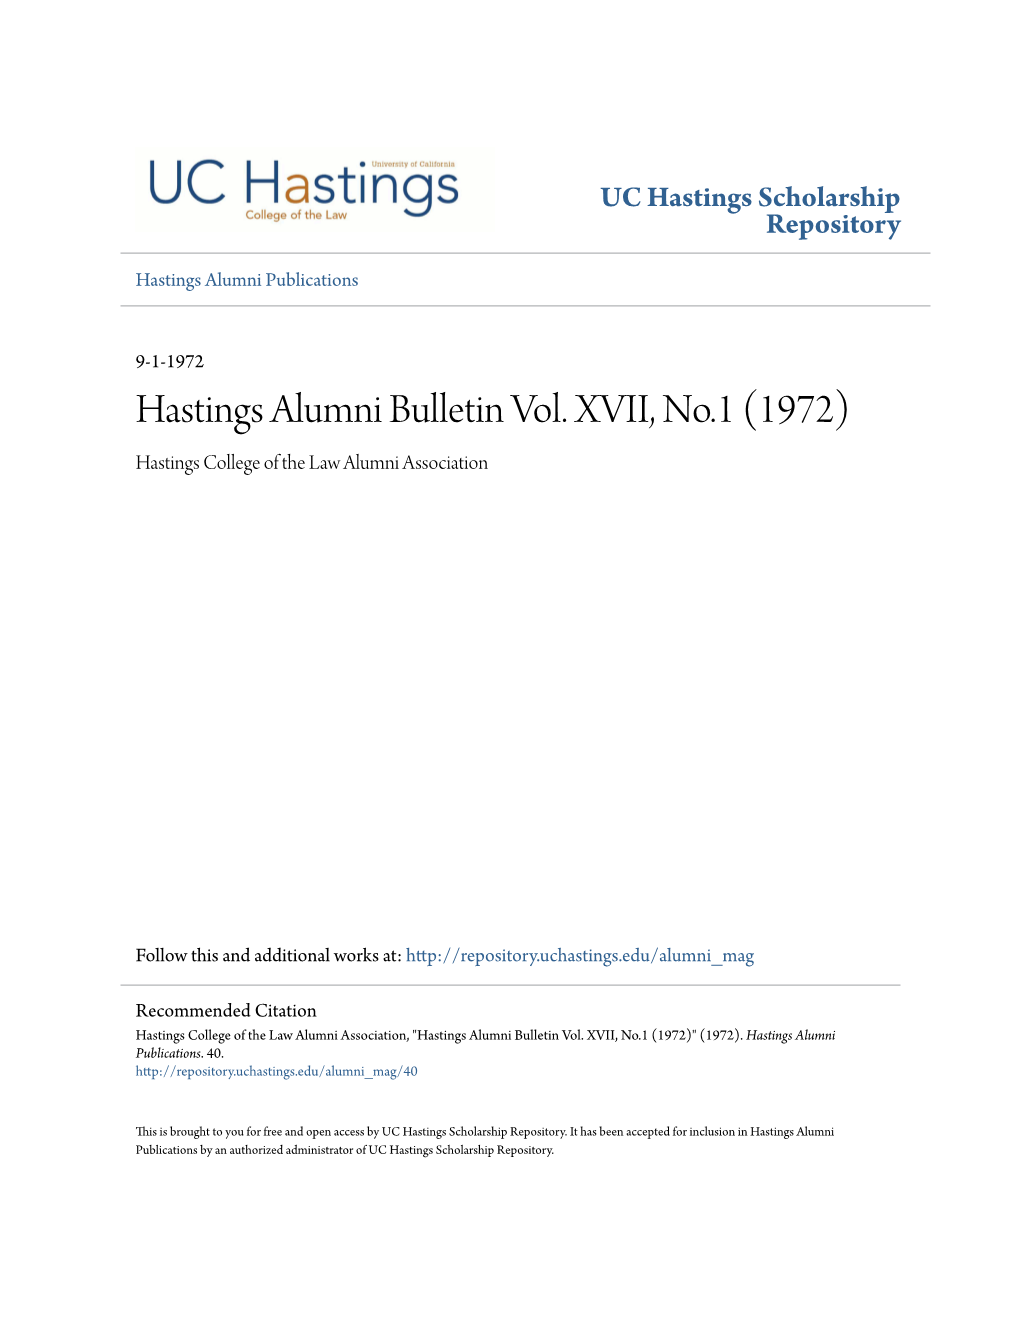 Hastings Alumni Bulletin Vol. XVII, No.1 (1972) Hastings College of the Law Alumni Association